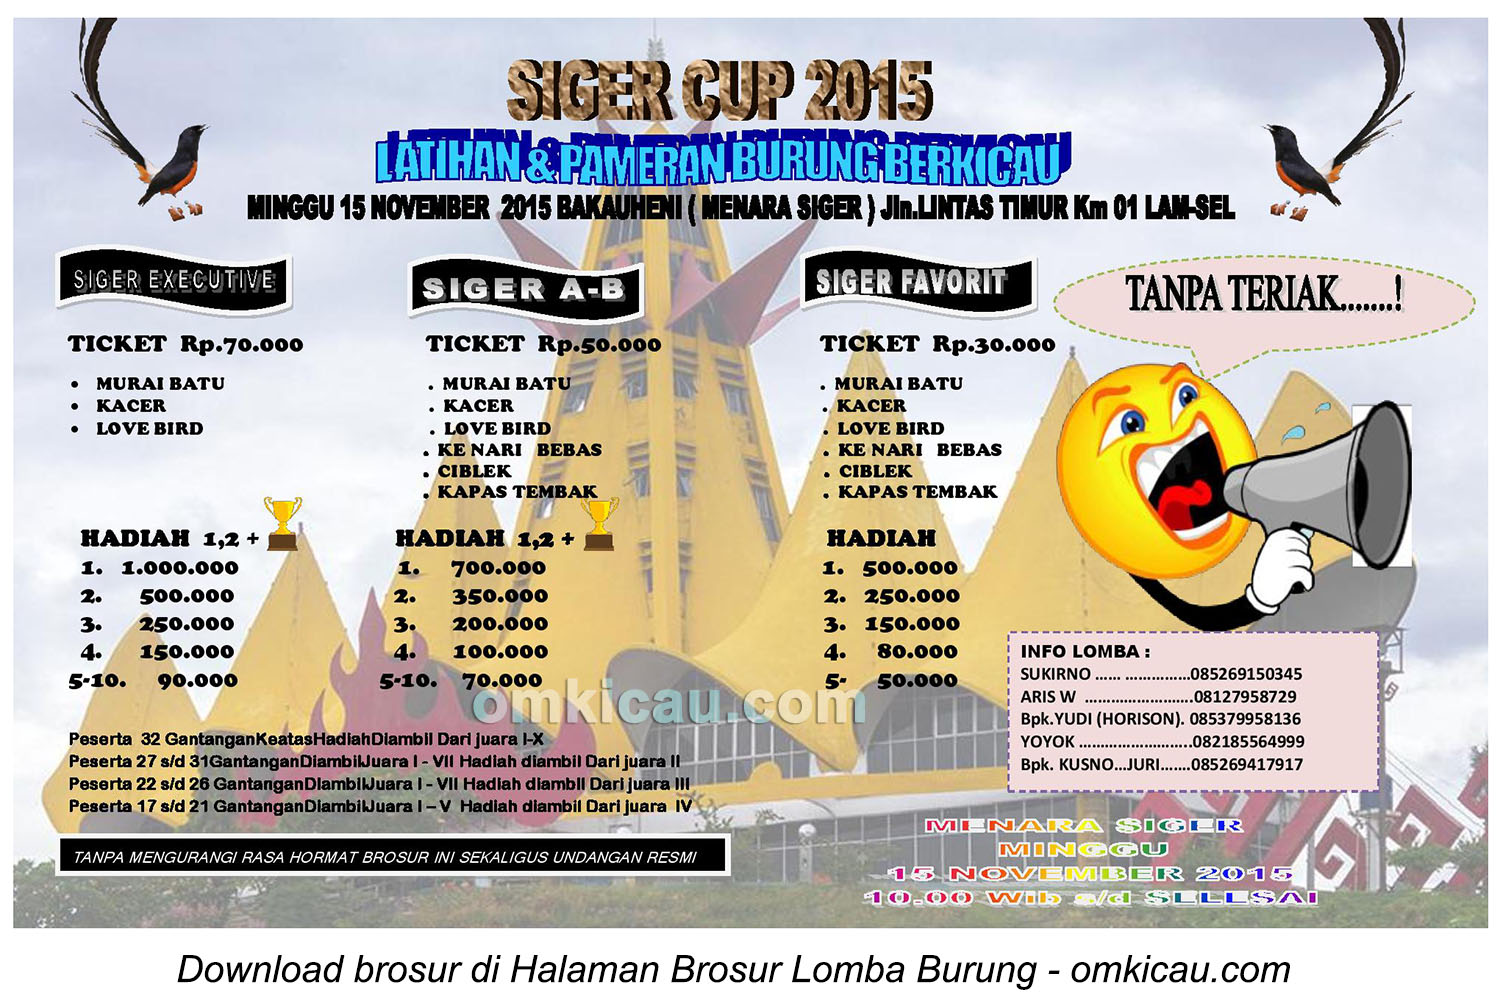 Brosur Latihan Burung Berkicau Siger Cup, Lampung Selatan, 15 November 2015